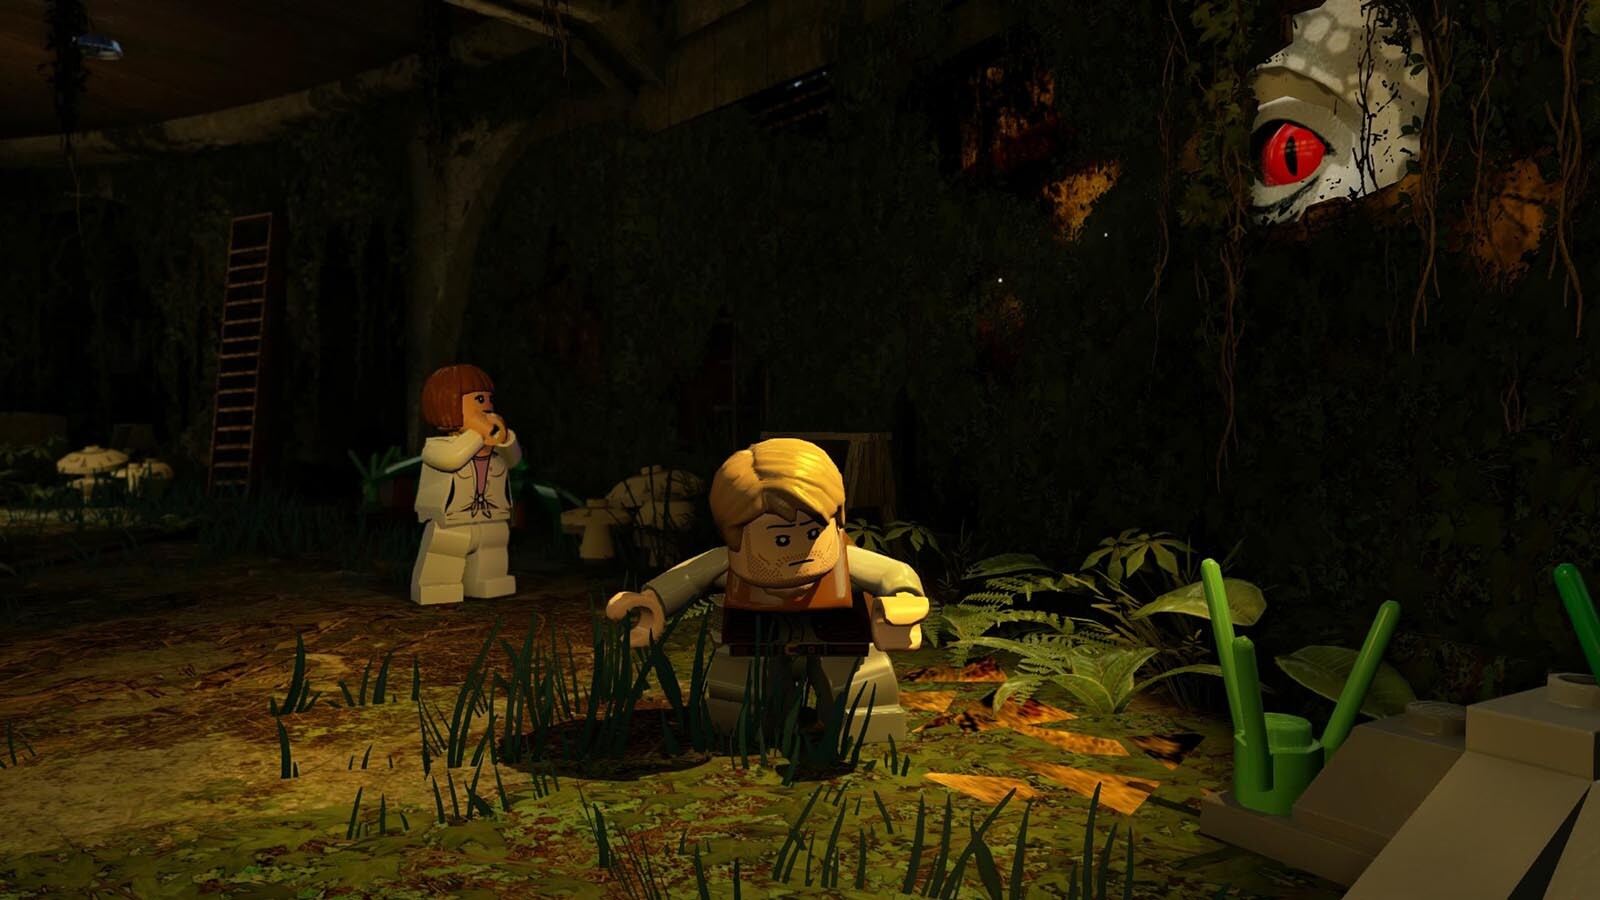 LEGO Jurassic World Steam Key for PC - Buy now